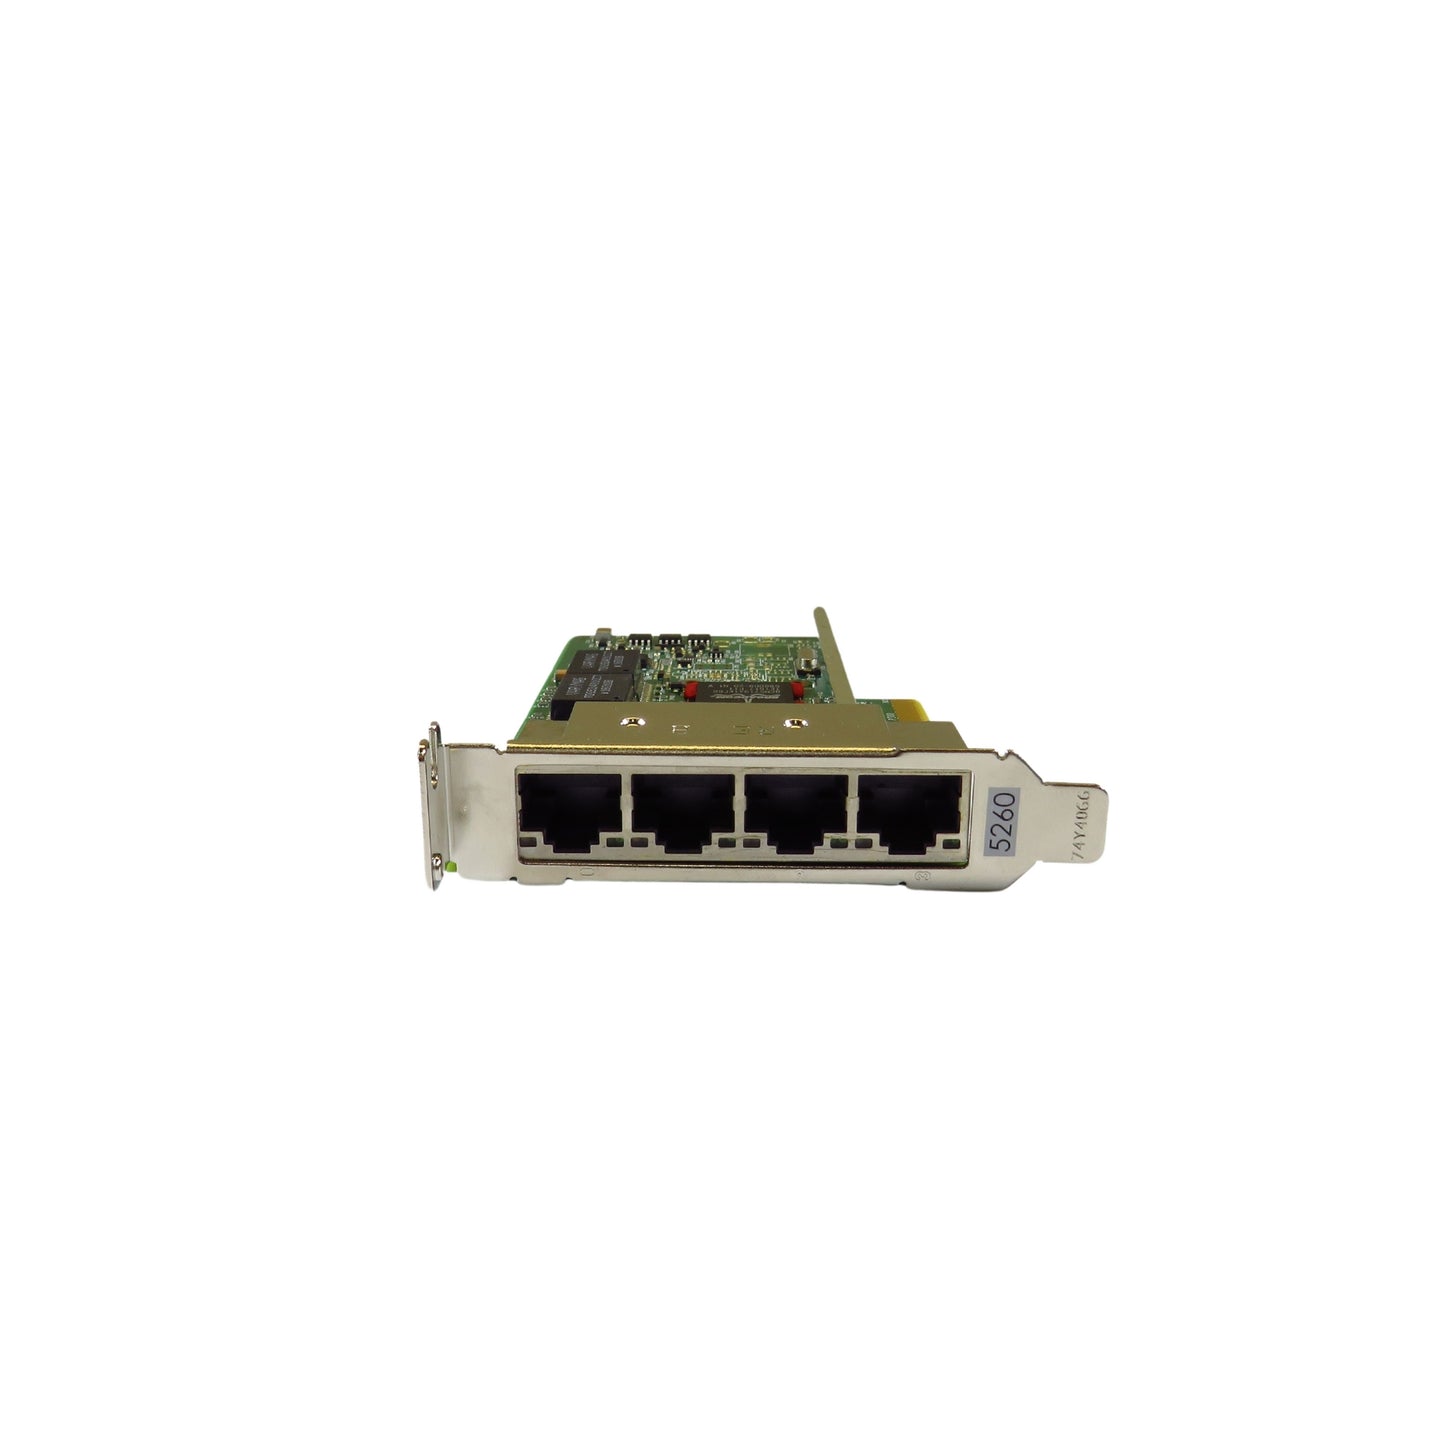 IBM 00RX898 5260 4 Port 1GbE Ethernet PCIe Network Card (Refurbished)